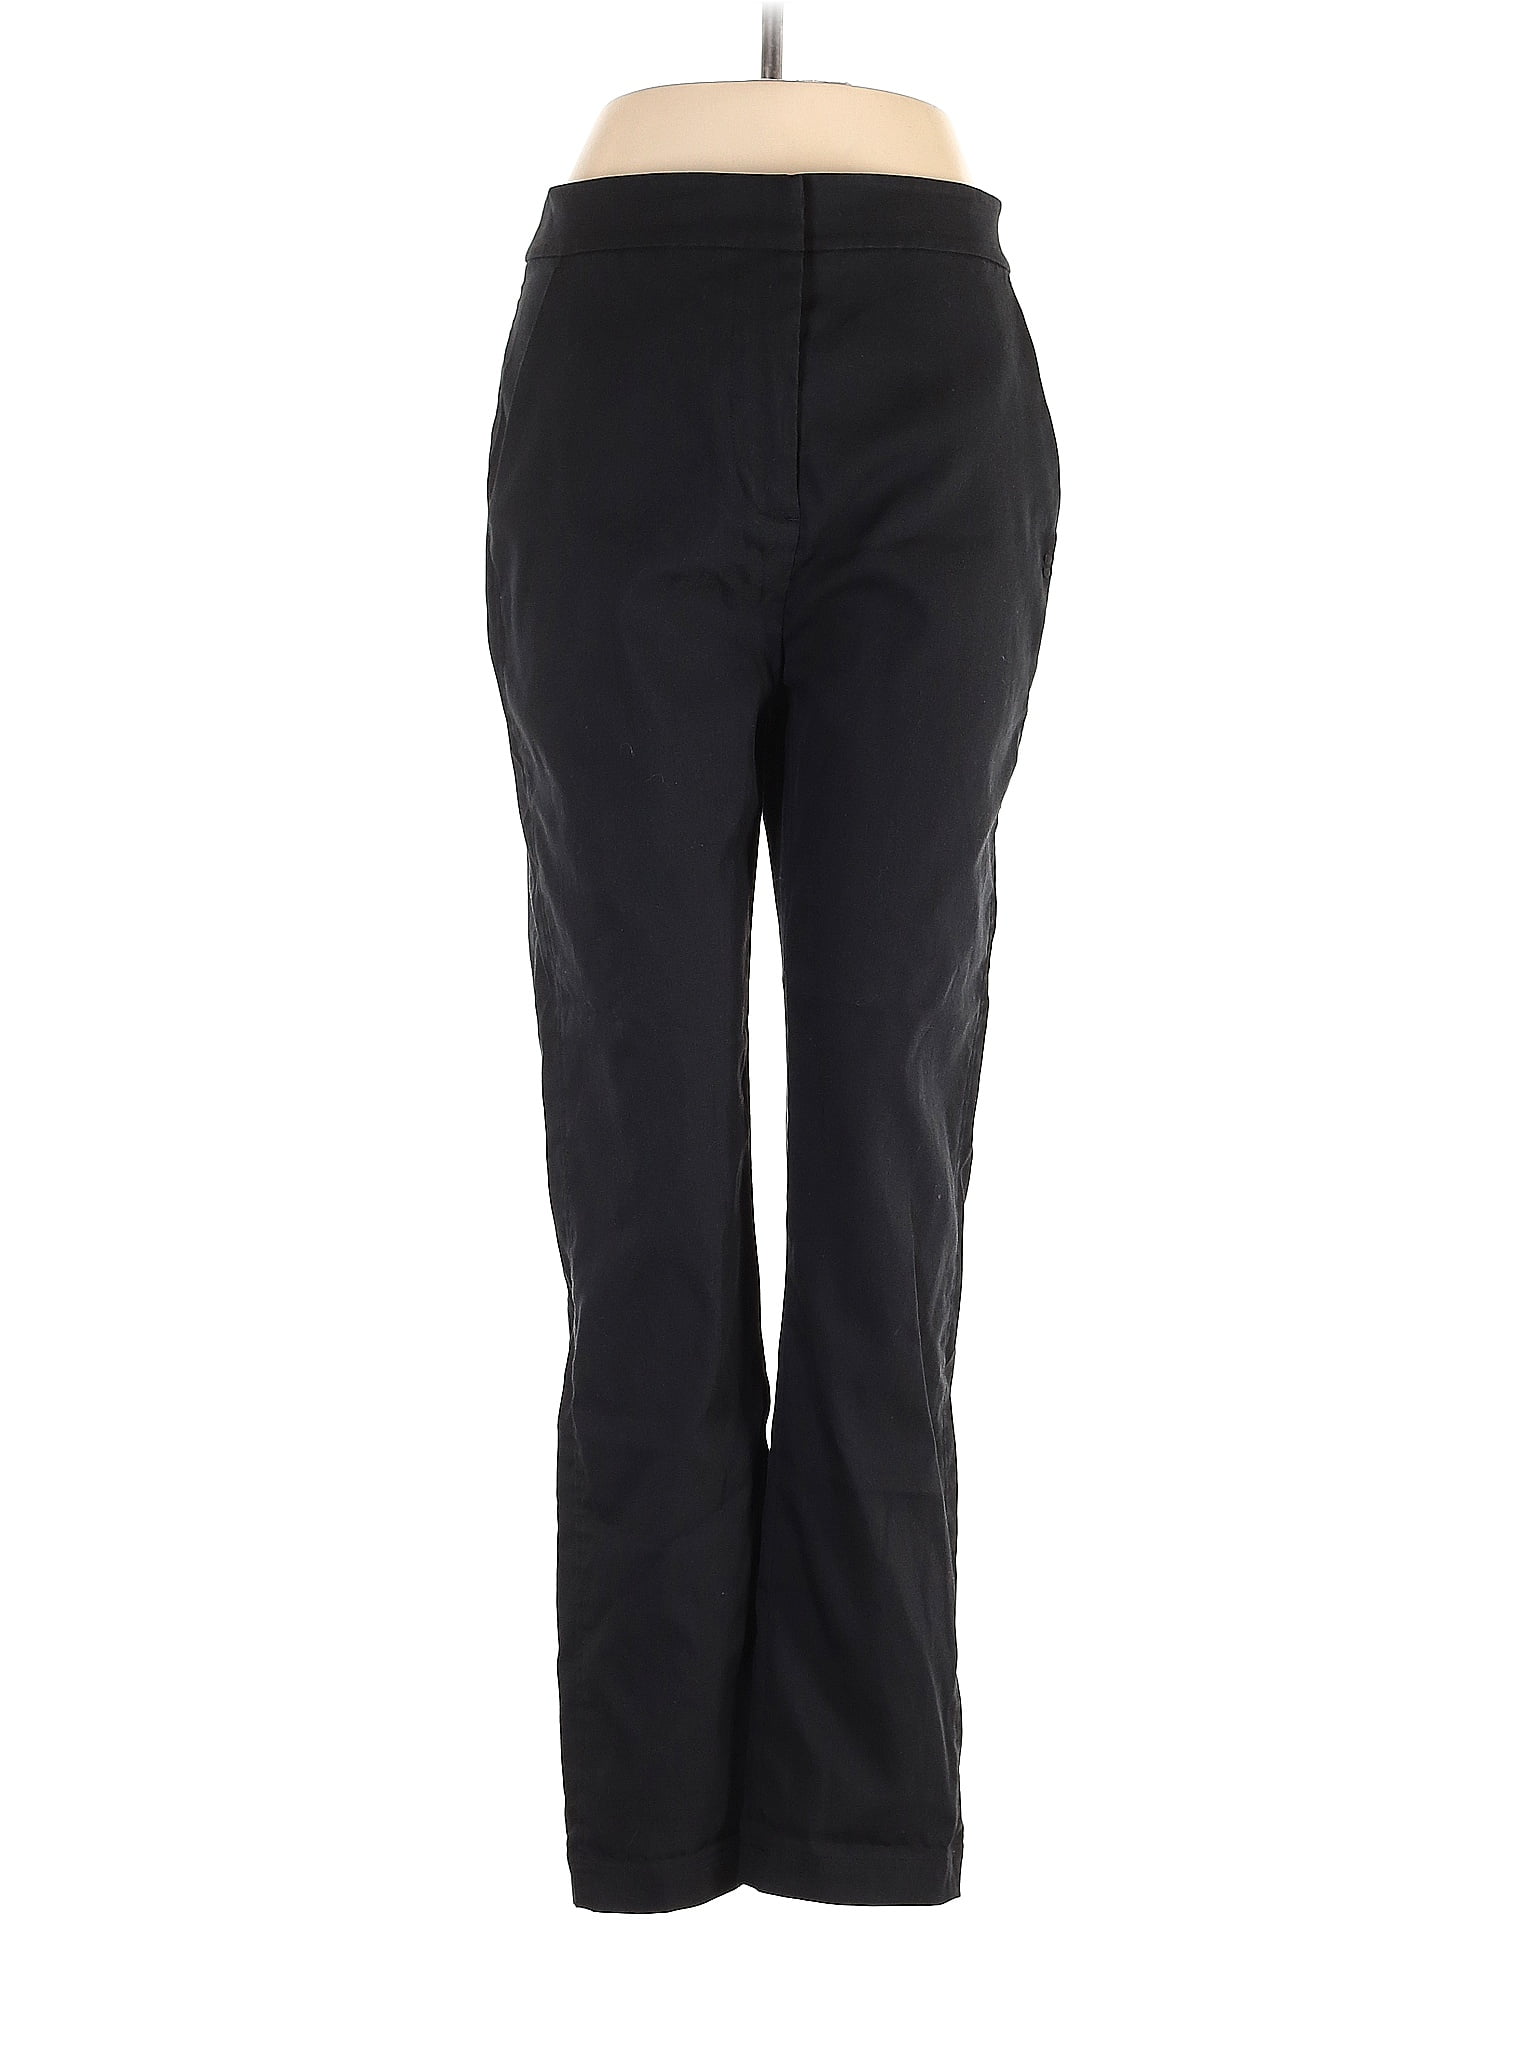 Sweaty Betty Black Active Pants Size XL - 67% off